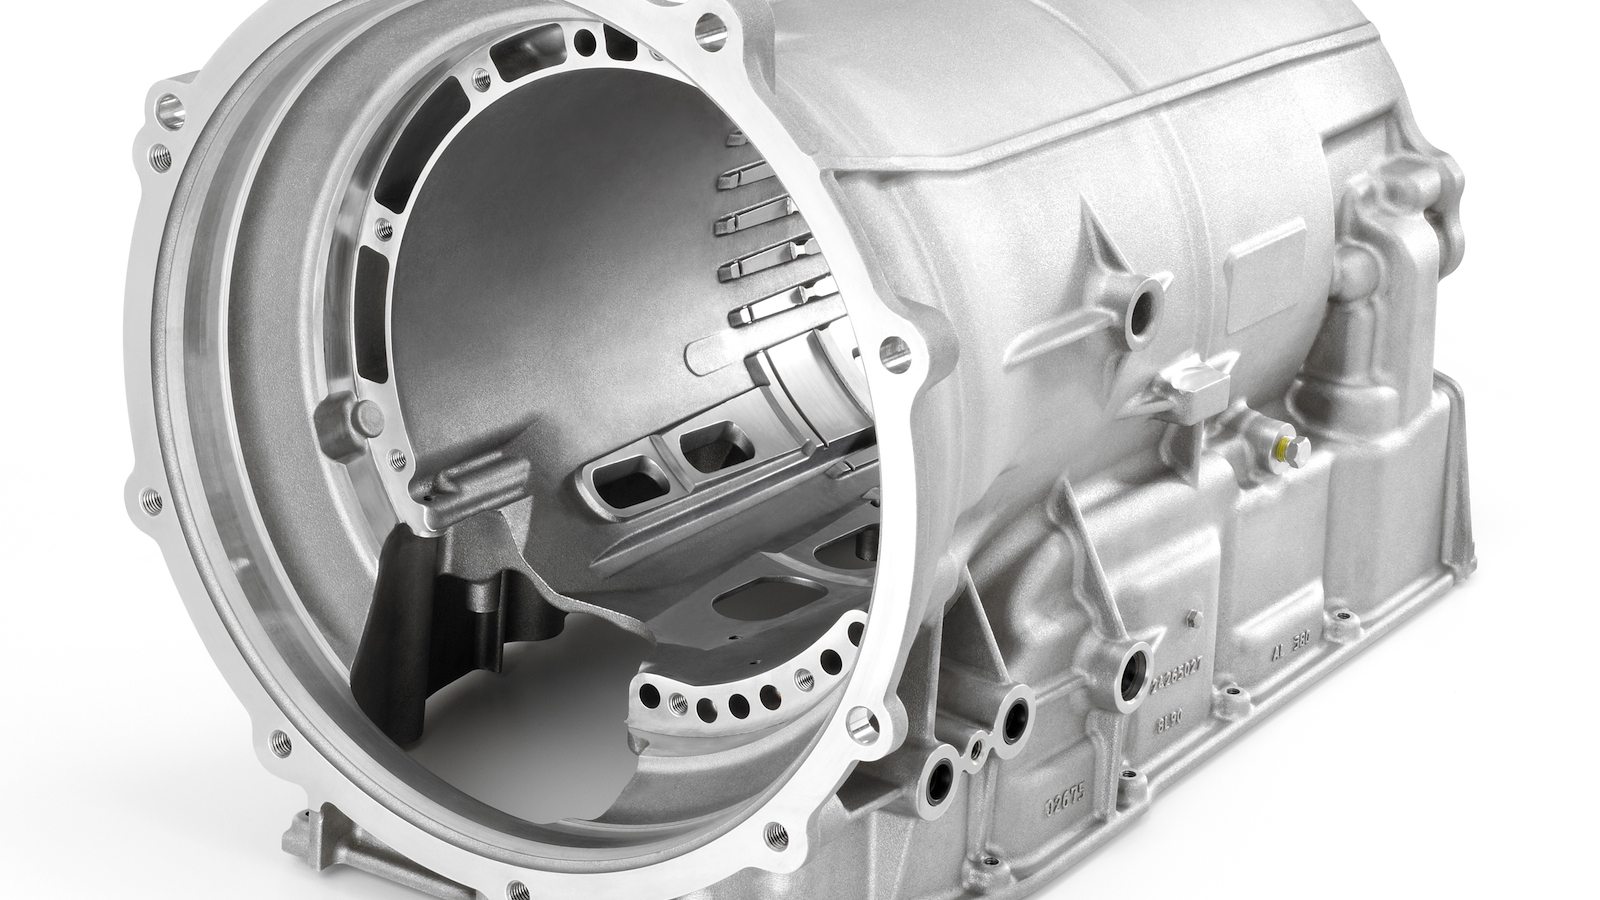 General Motors Hydra-Matic 8L90 8-speed automatic transmission components